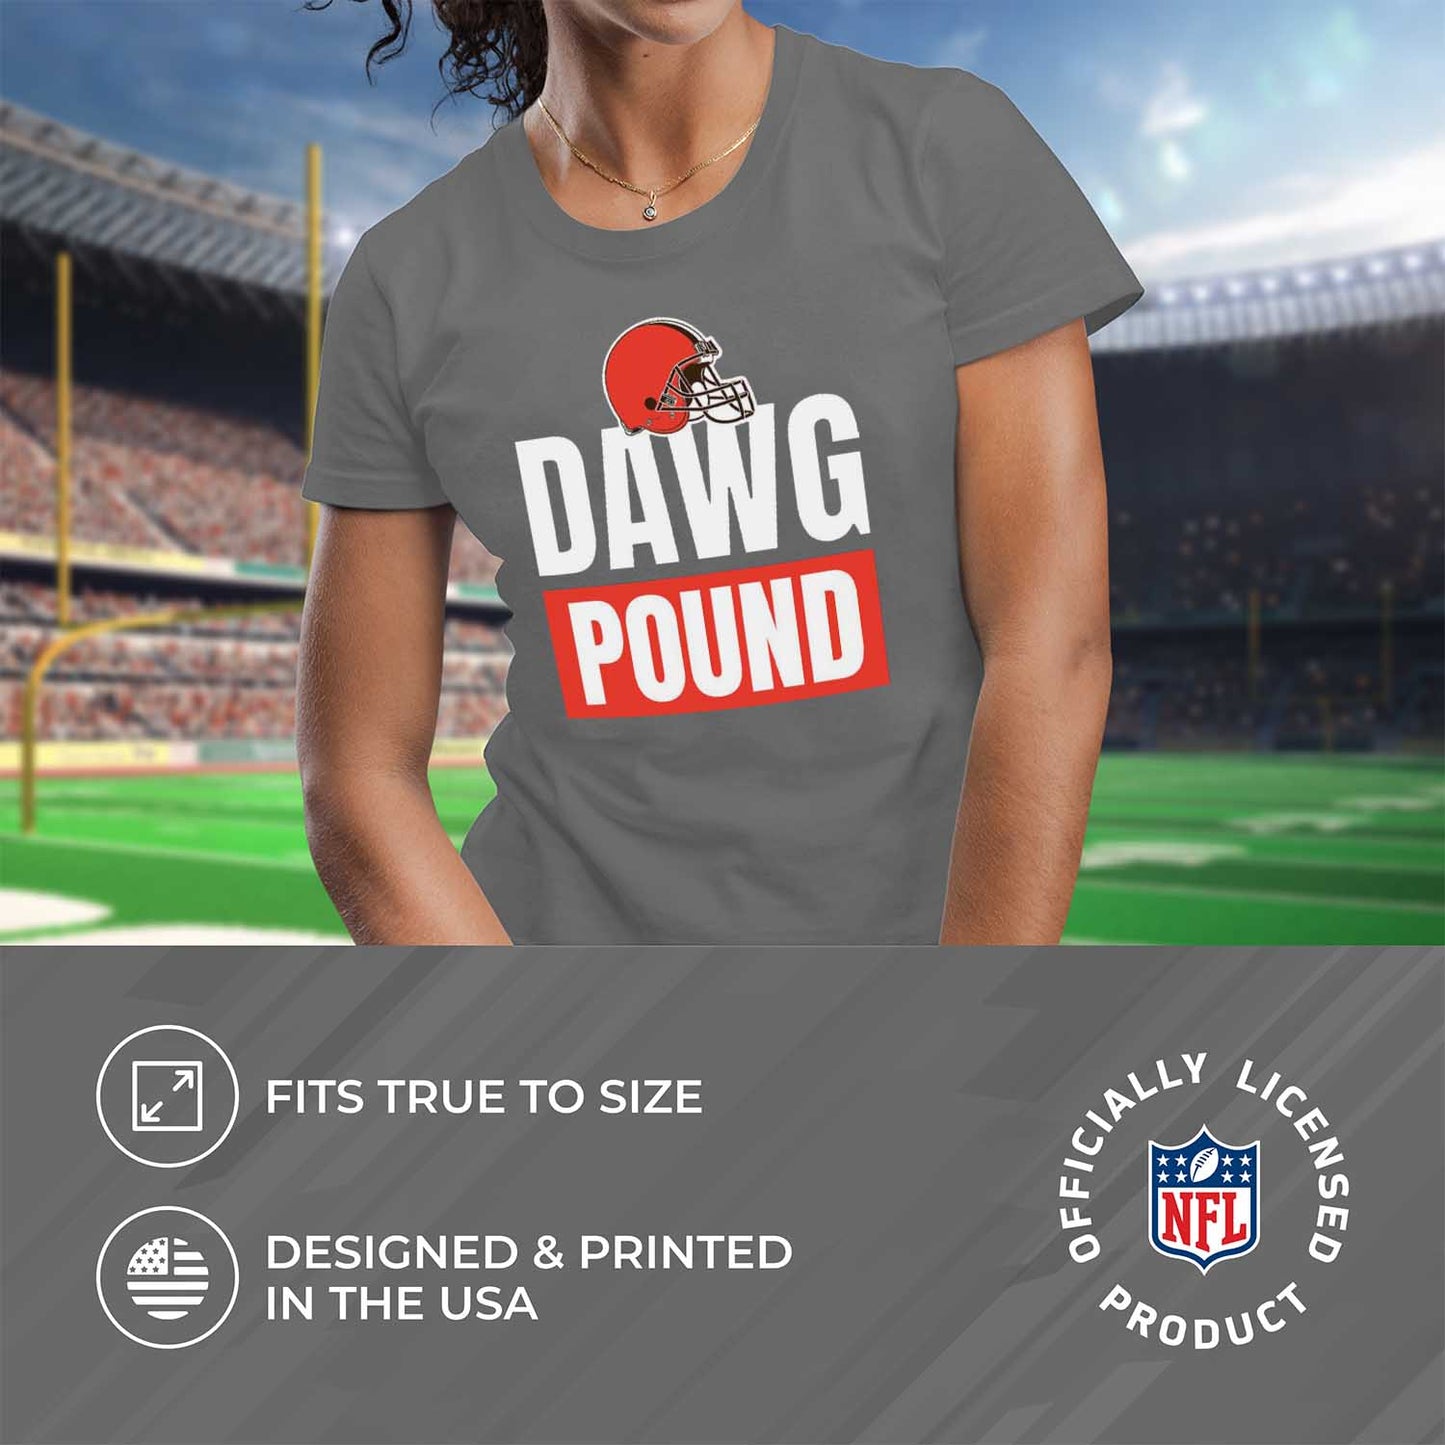 Cleveland Browns NFL Womens Team Slogan Short Sleeve Tshirt - Sport Gray